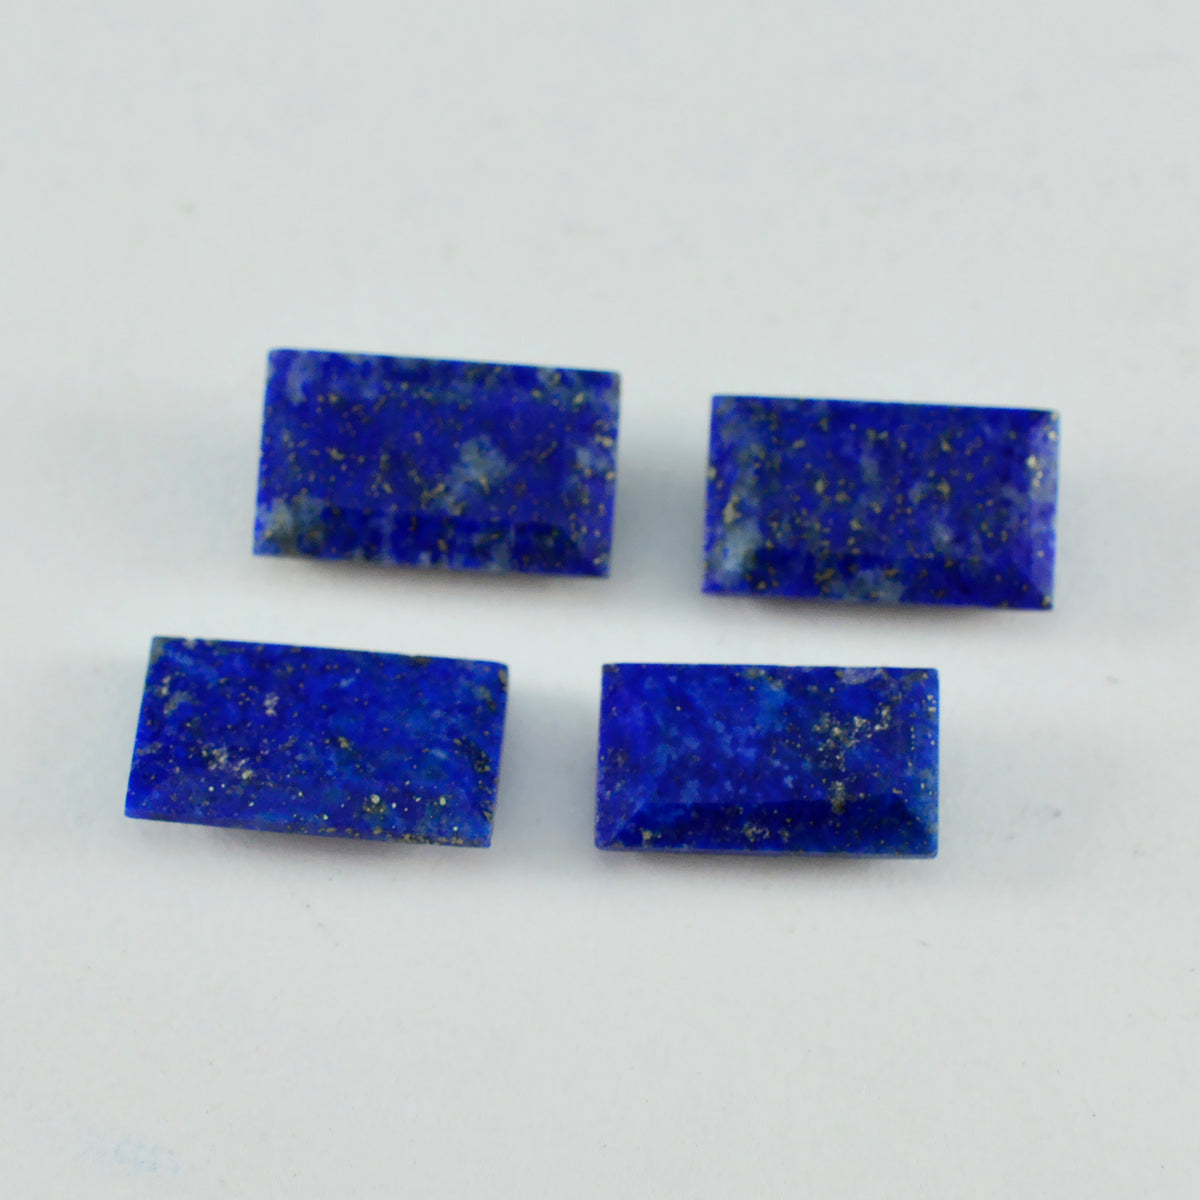 Riyogems 1PC Echte Blauwe Lapis Lazuli Facet 7x14 mm Baguette Vorm prachtige Kwaliteit Steen